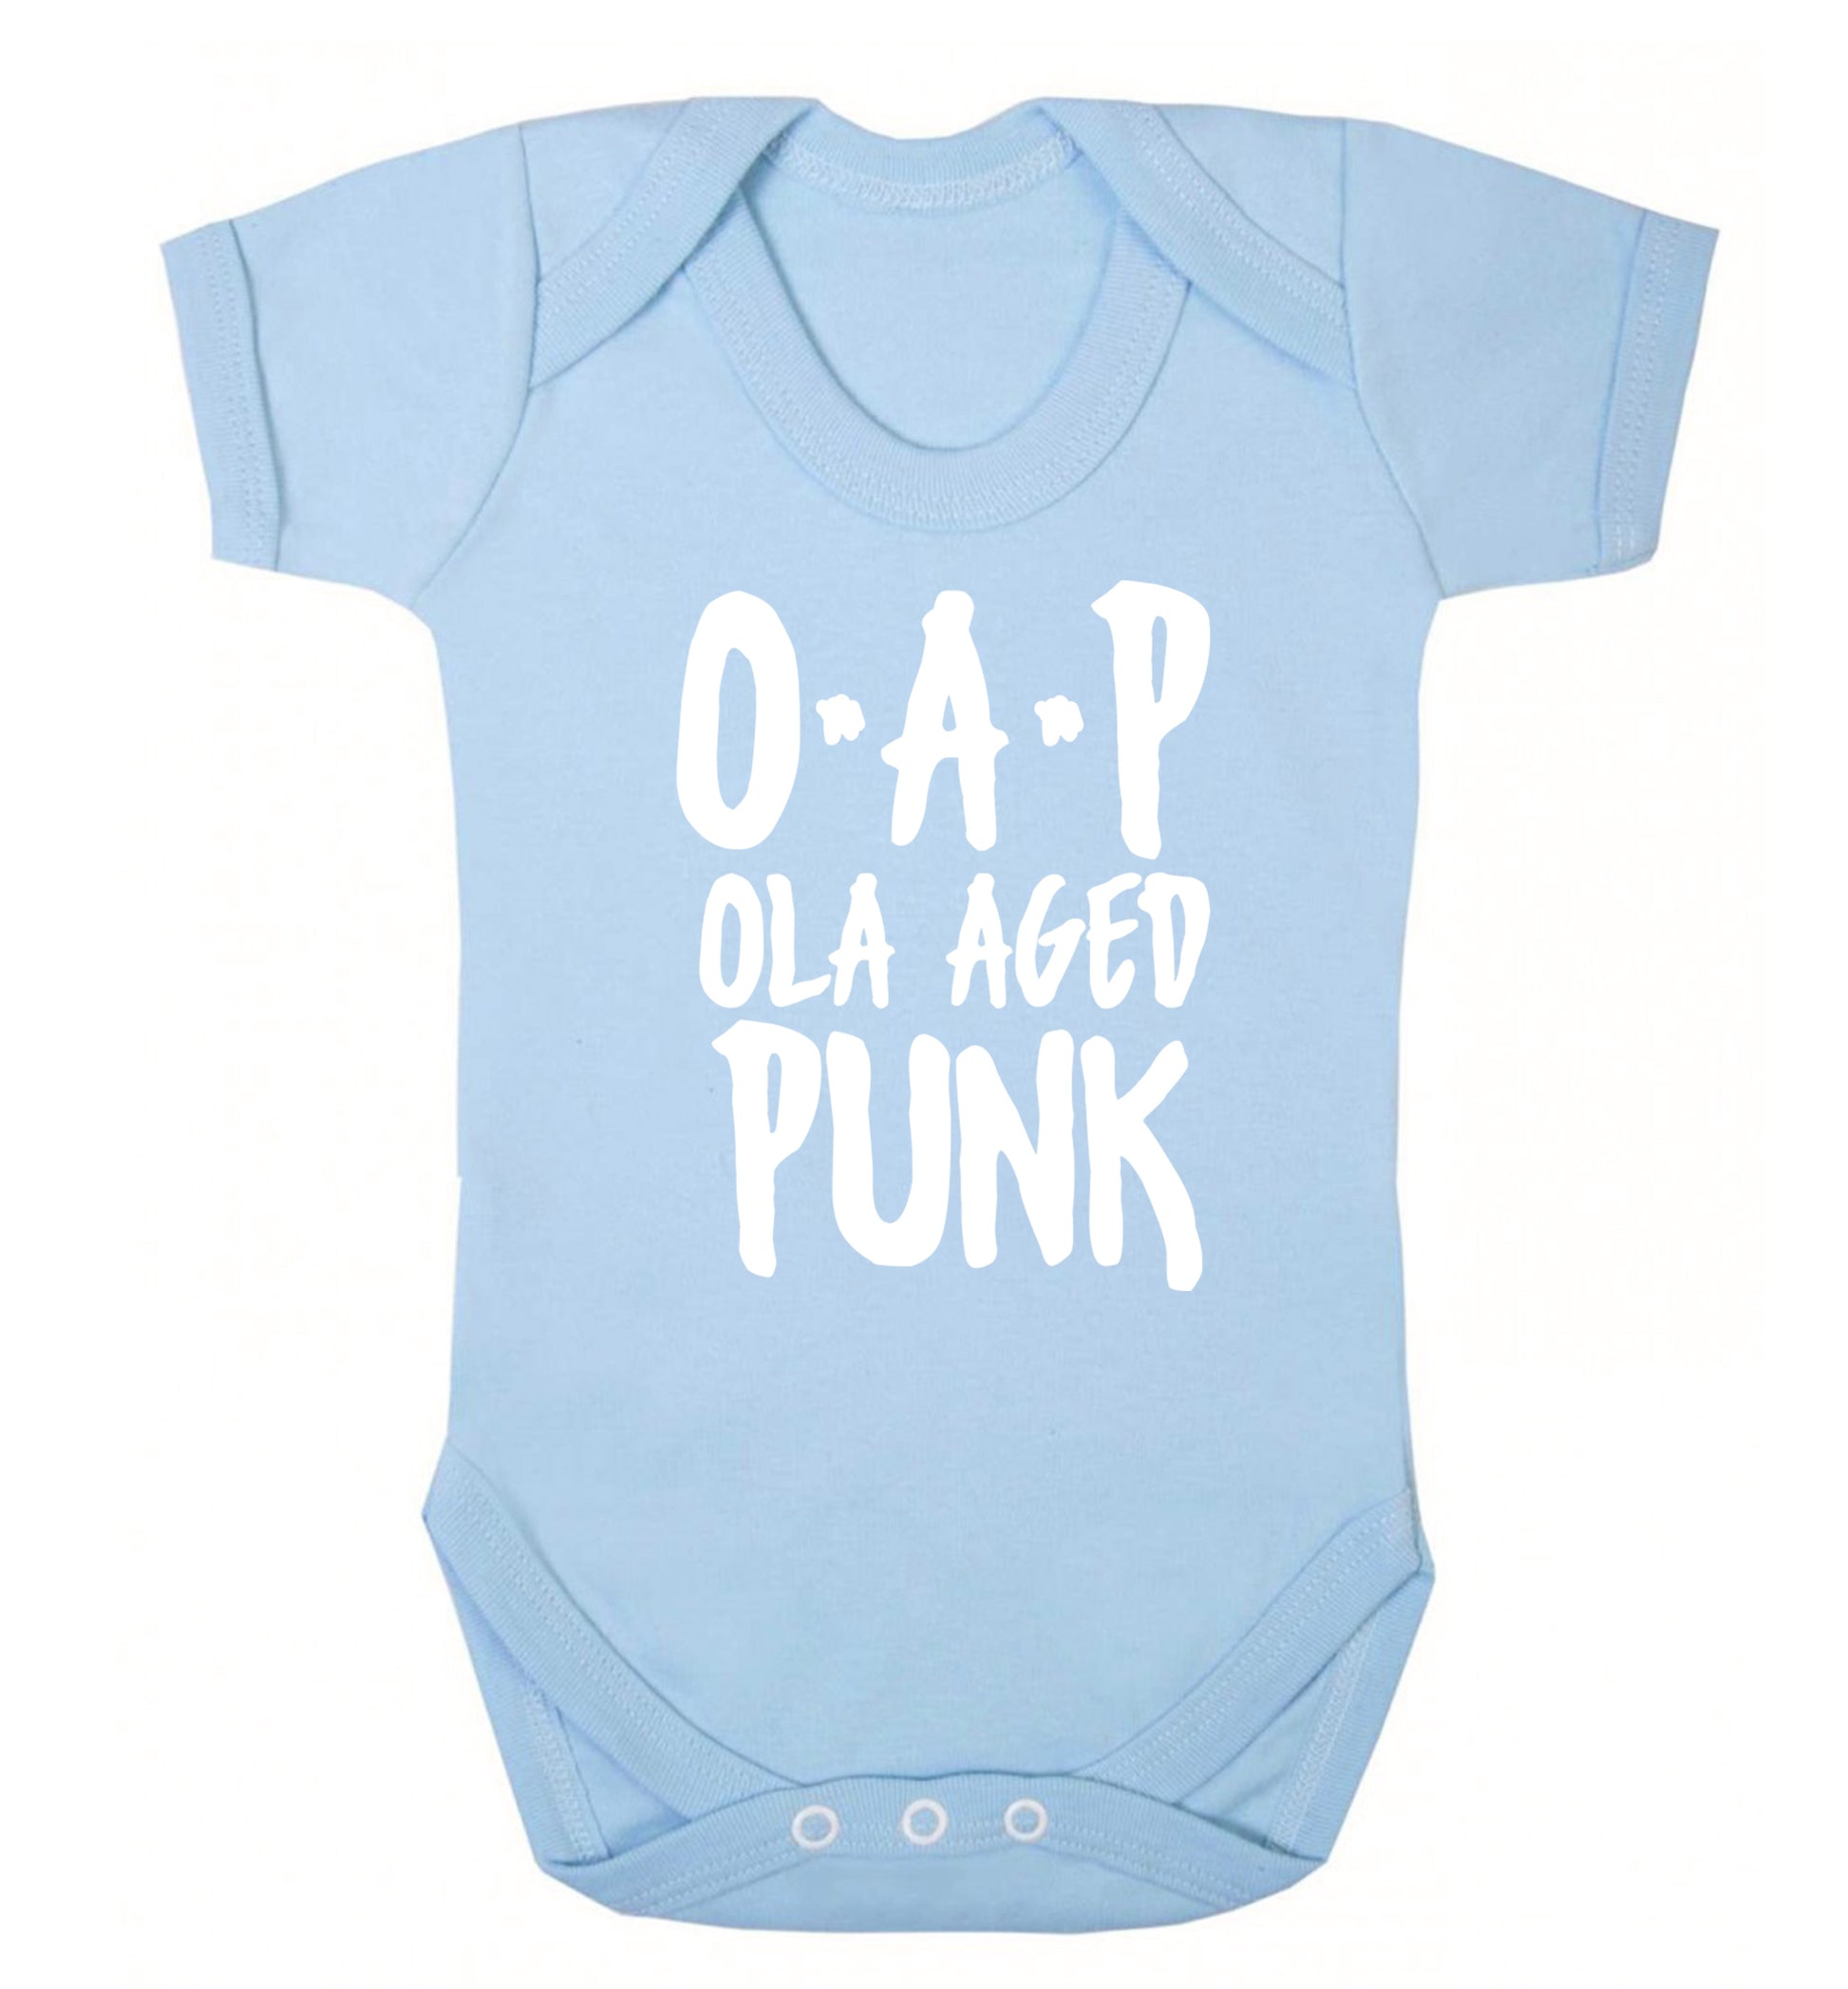 O.A.P Old Aged Punk Baby Vest pale blue 18-24 months